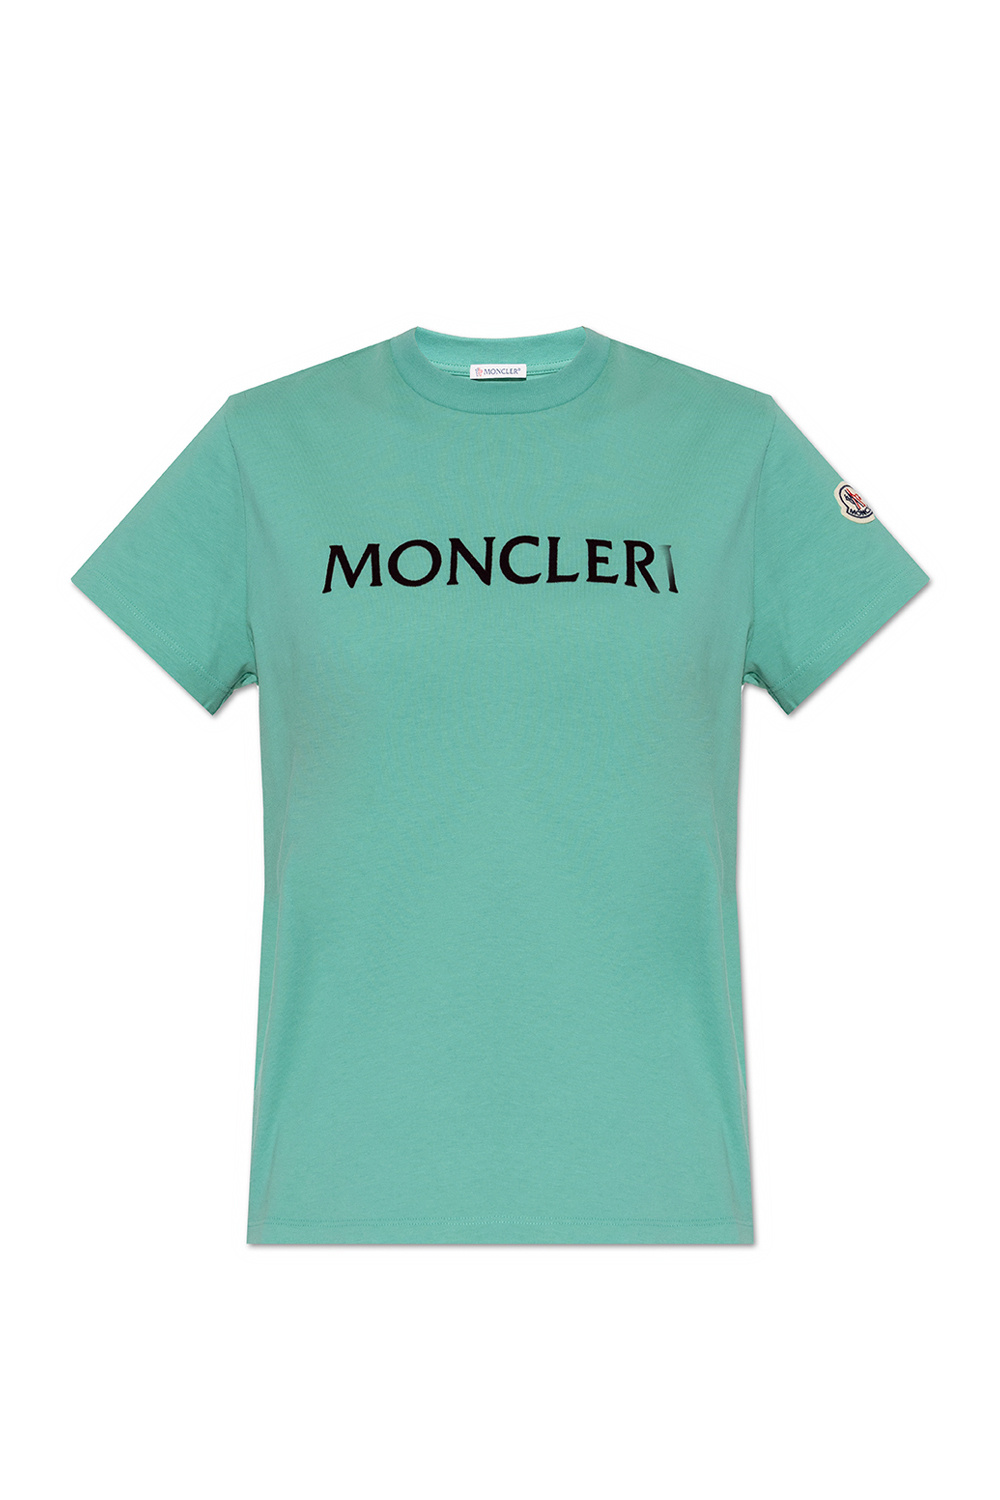 Moncler off white ow logo cotton t shirt item